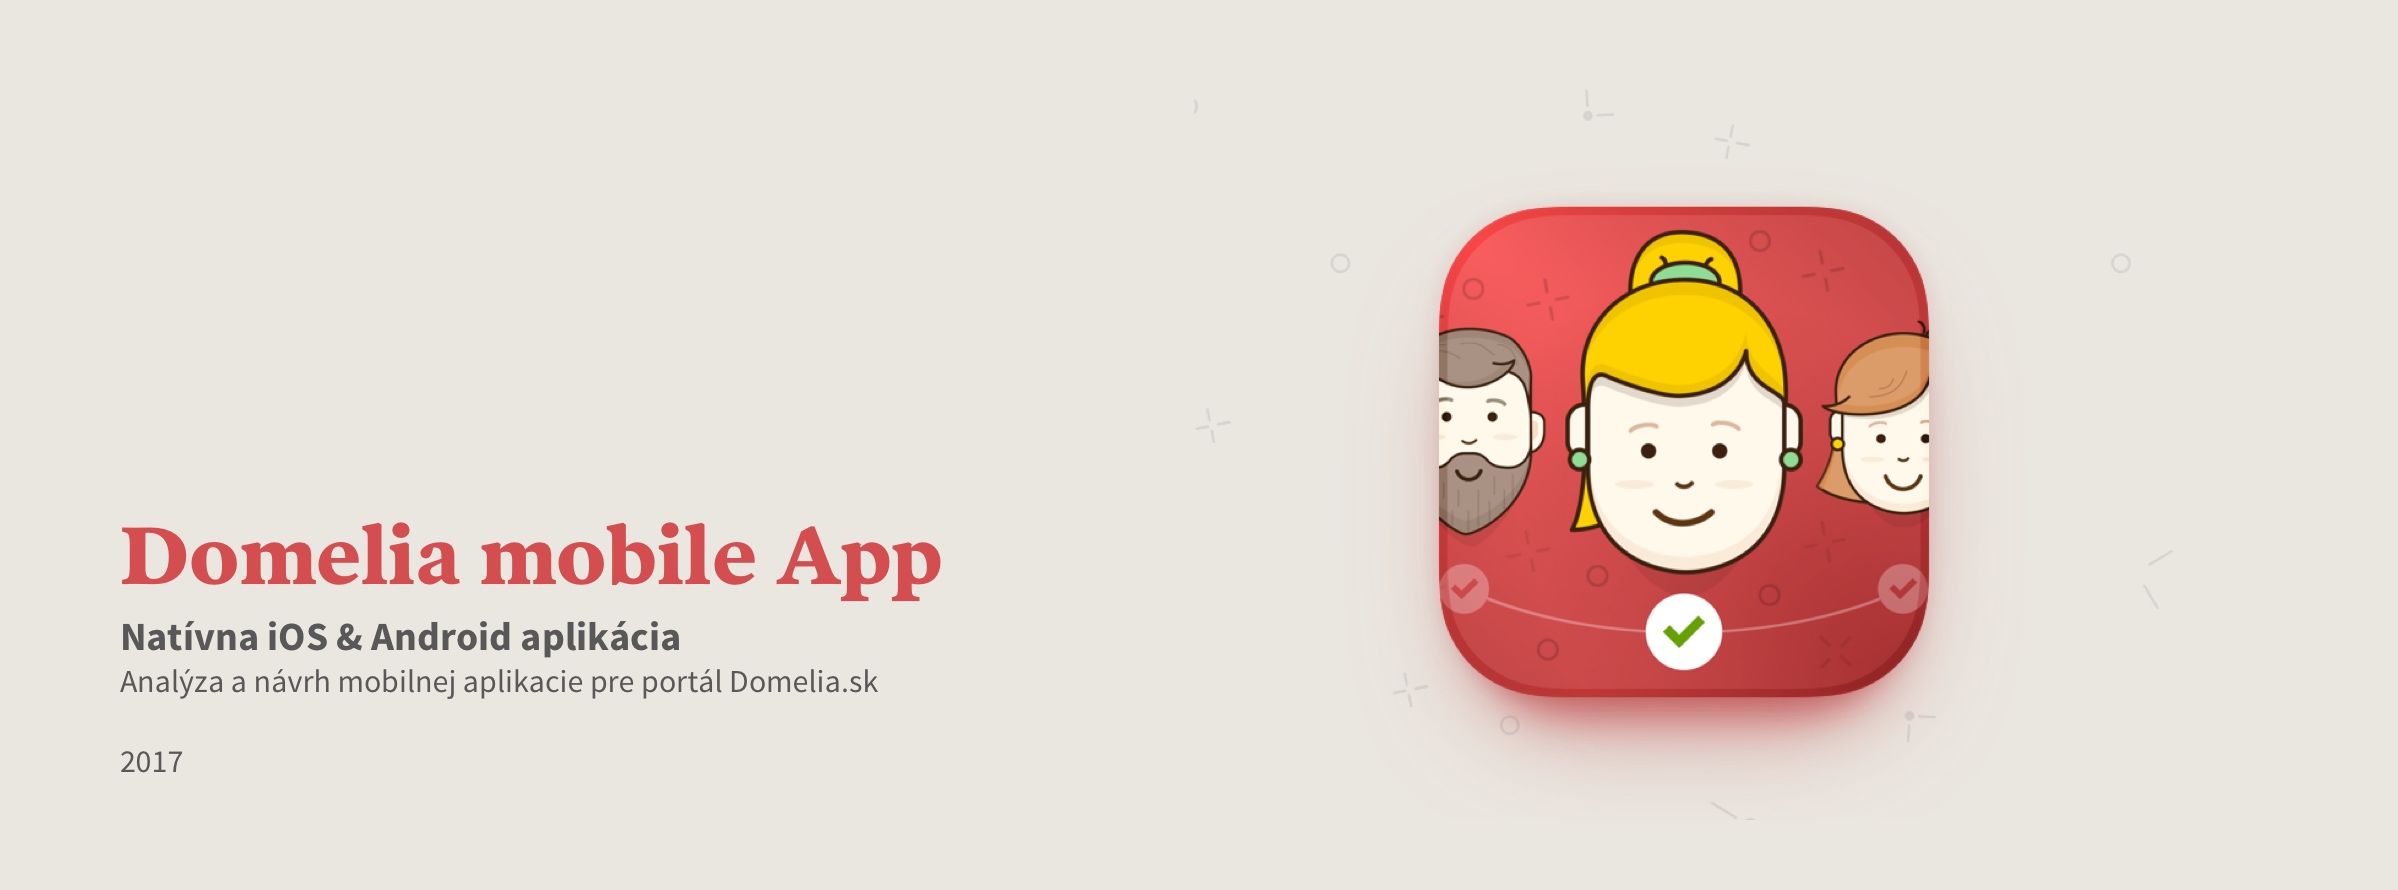 Domelia mobile App